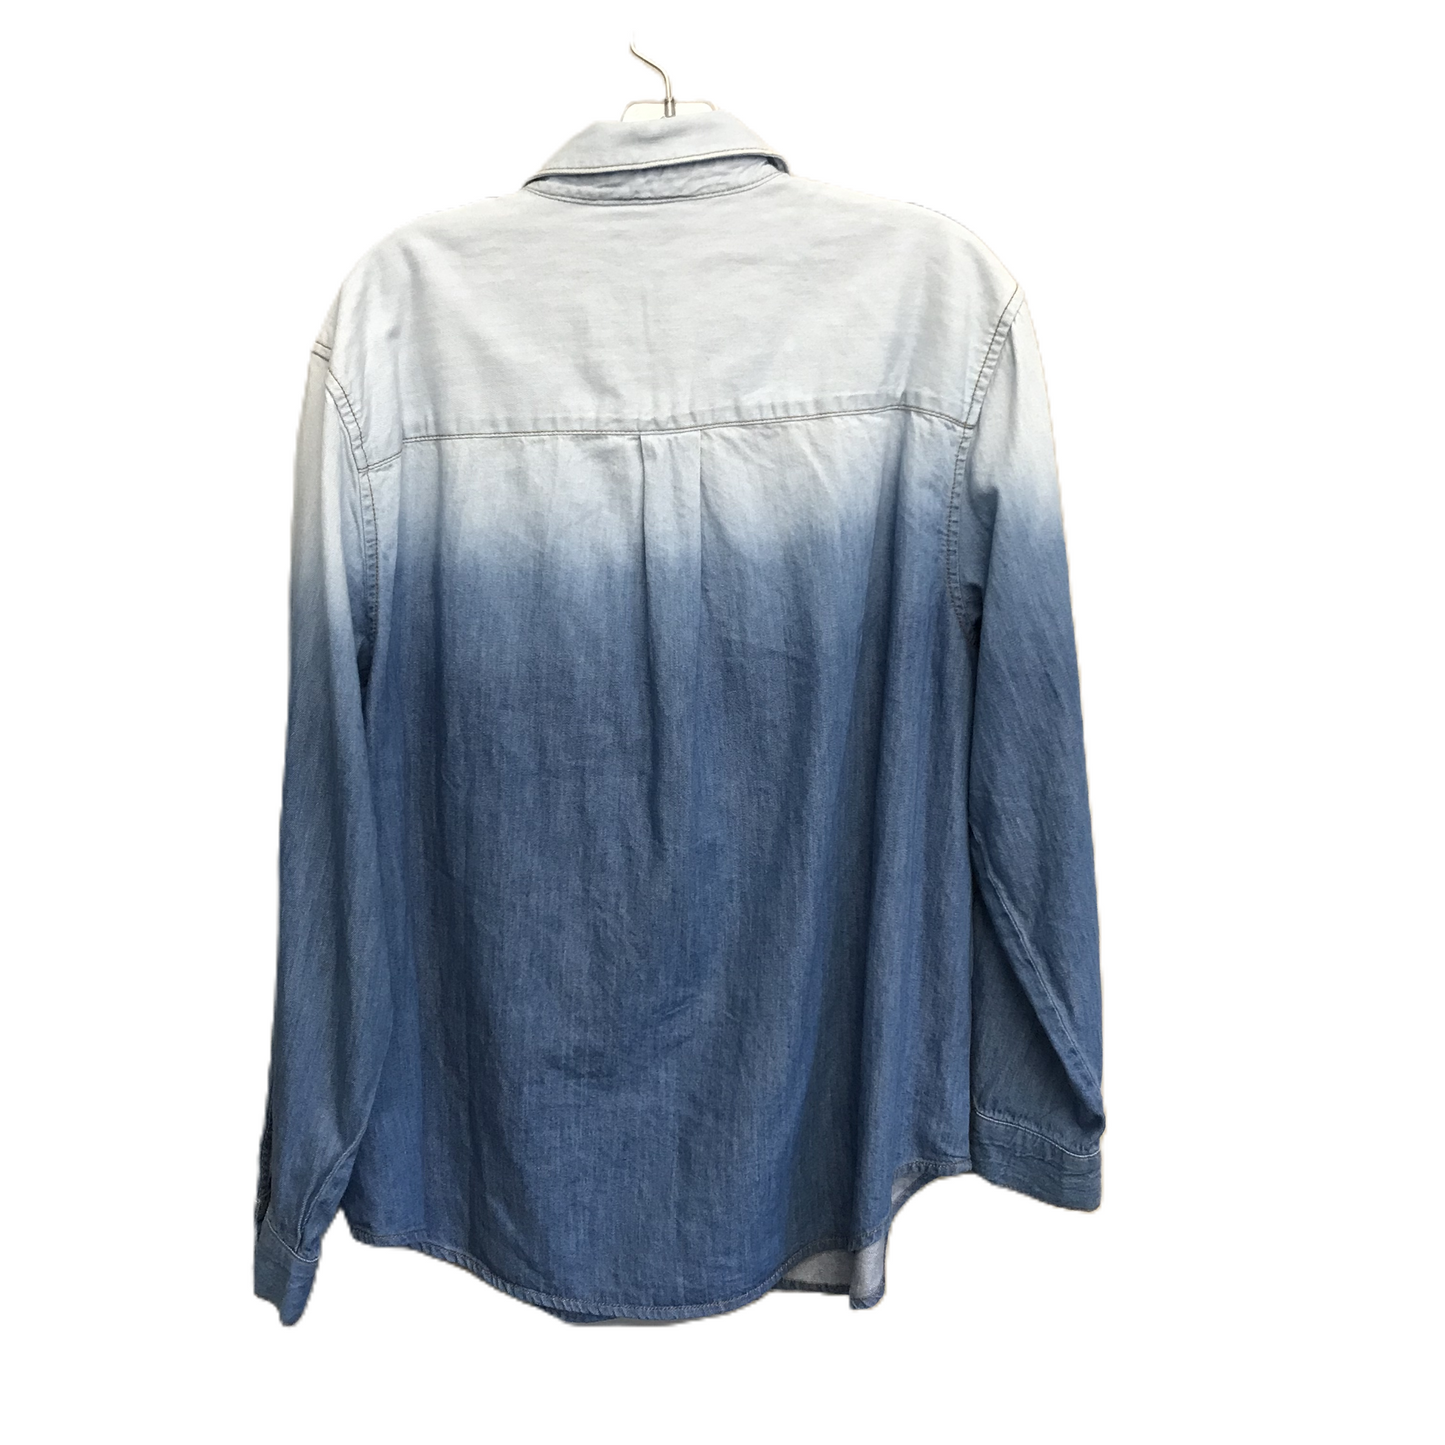 Blue Denim Top Long Sleeve By Lane Bryant, Size: Xl